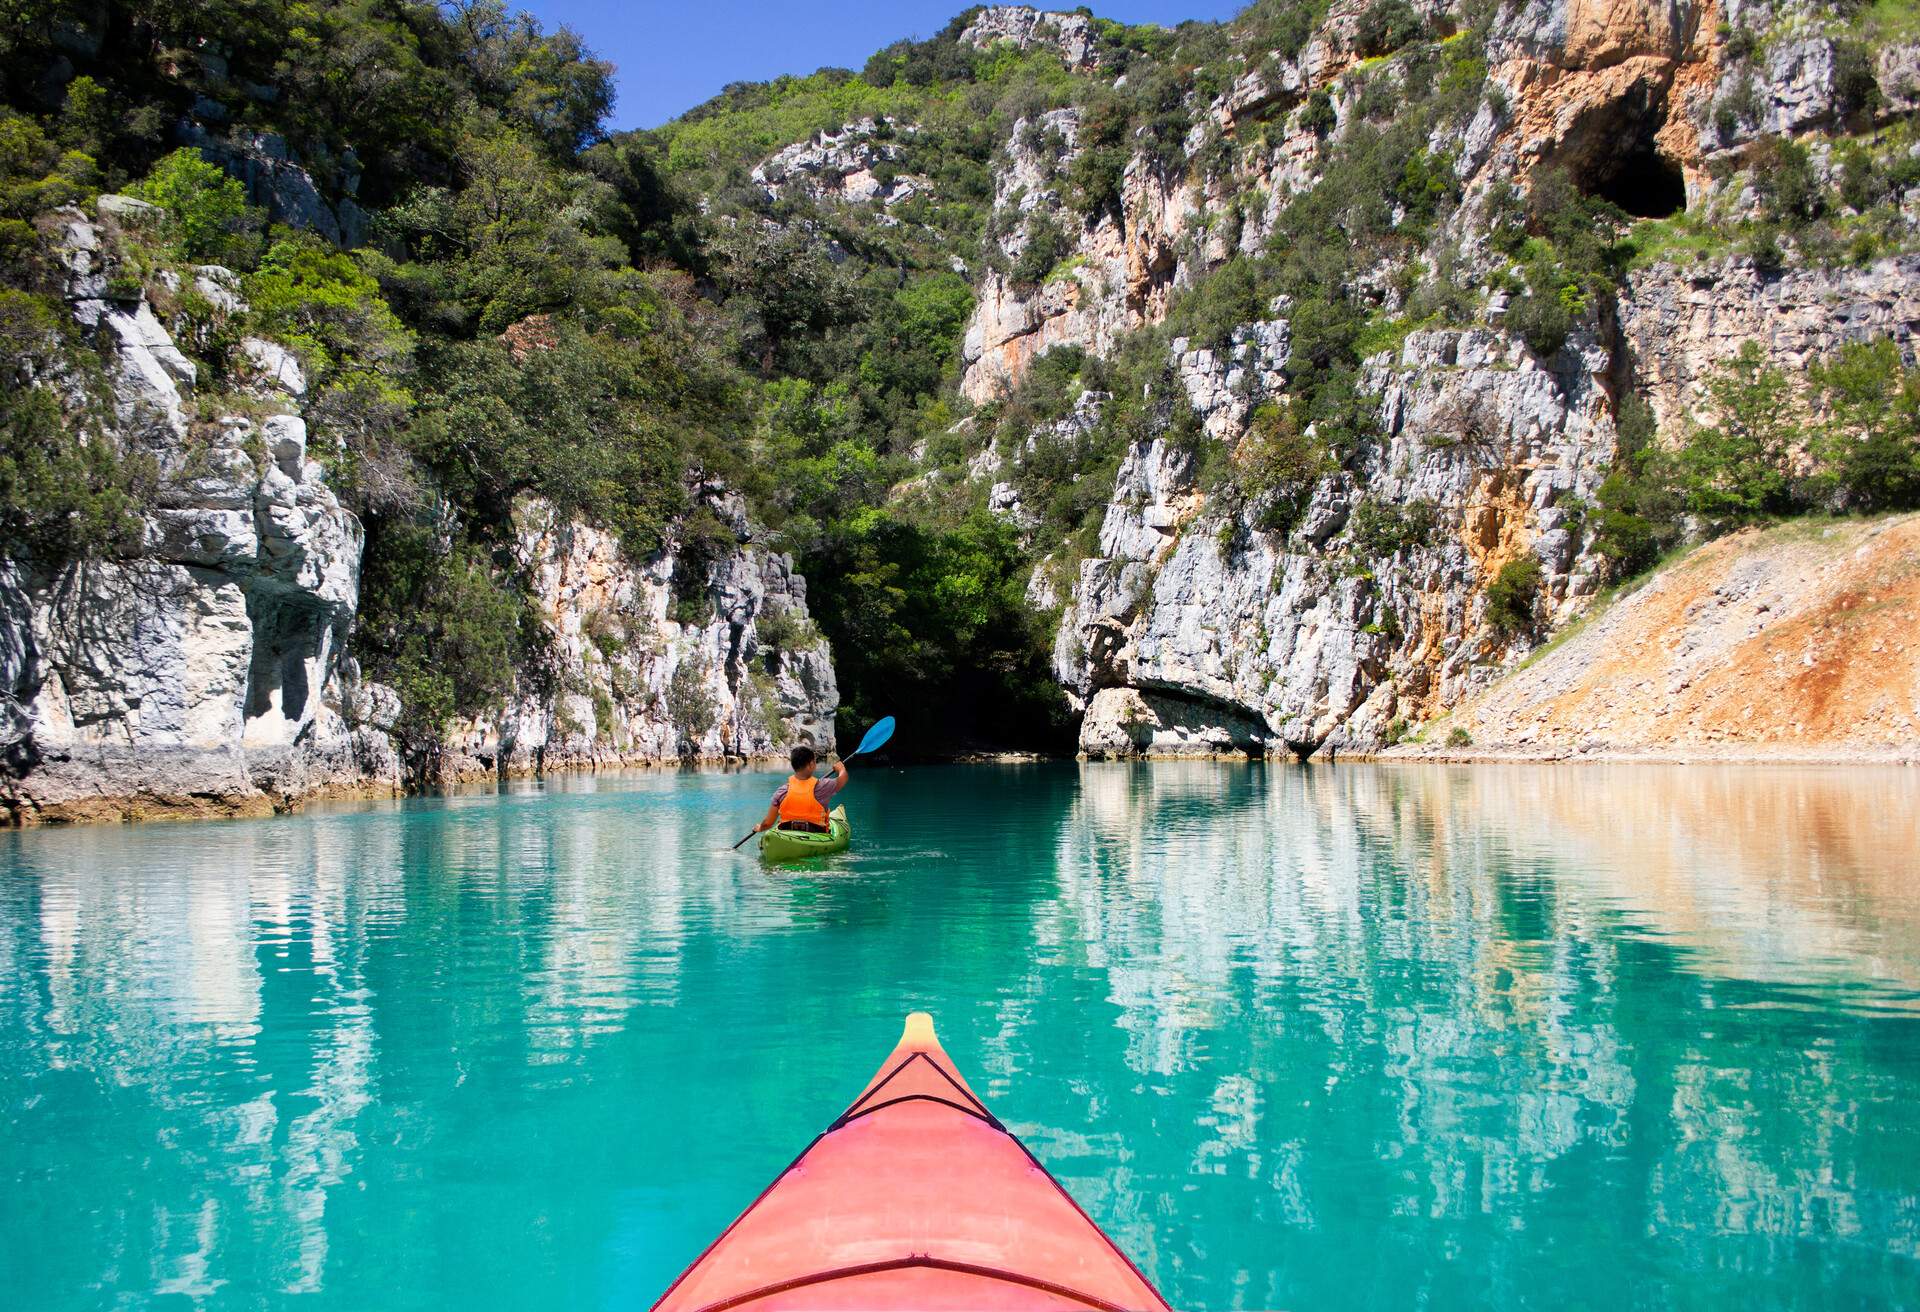 france_provence_verdon-gorge_nature_kayaks_people_kayaking_gettyimages-1463500227